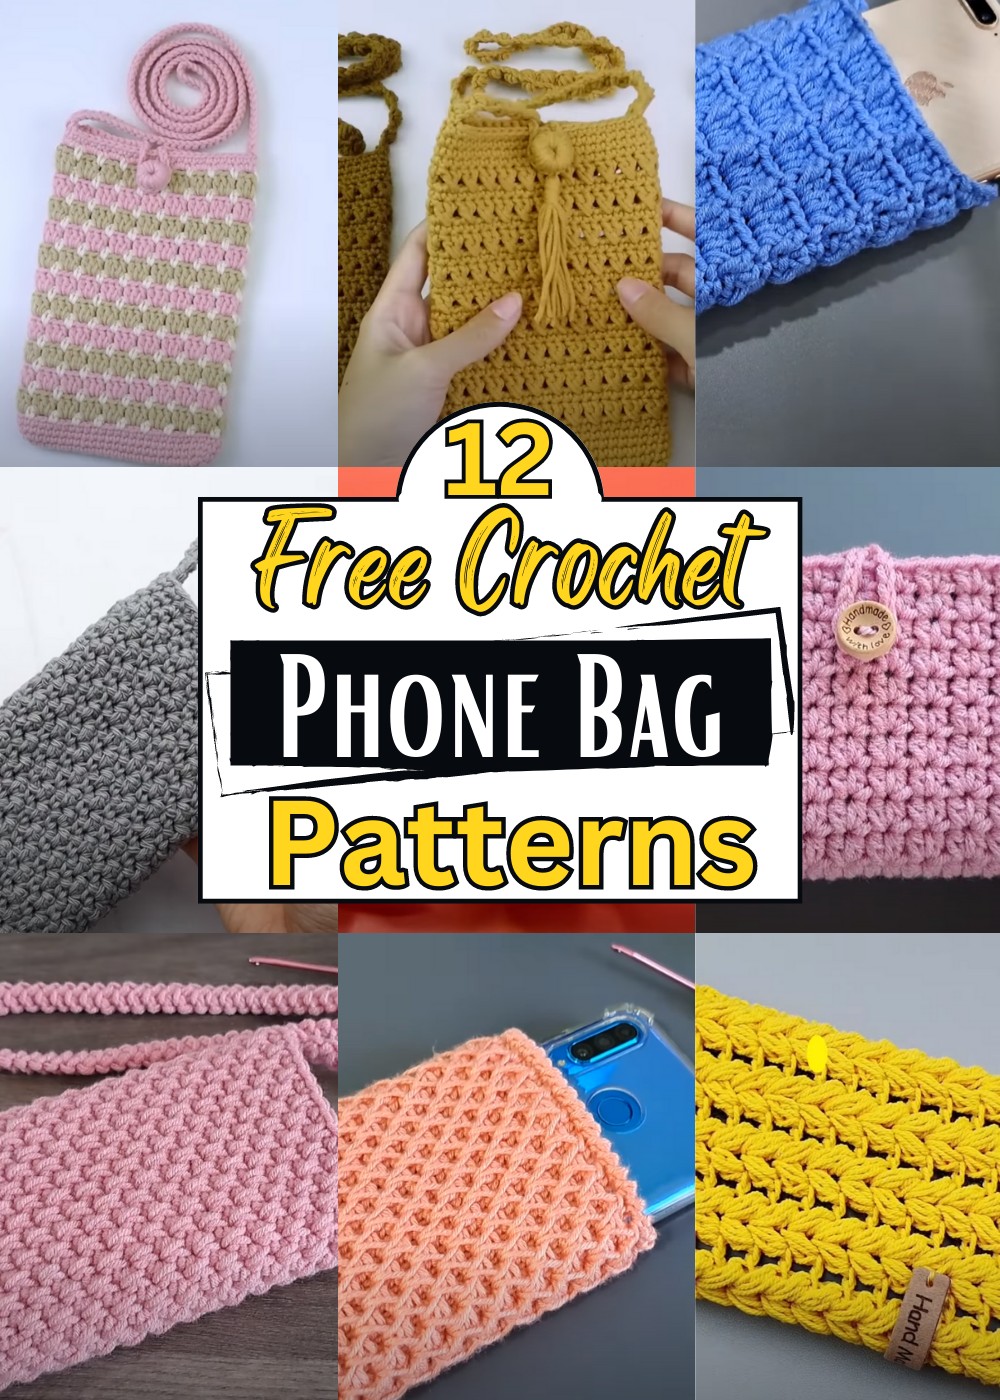 Crochet Phone Bag Patterns 1